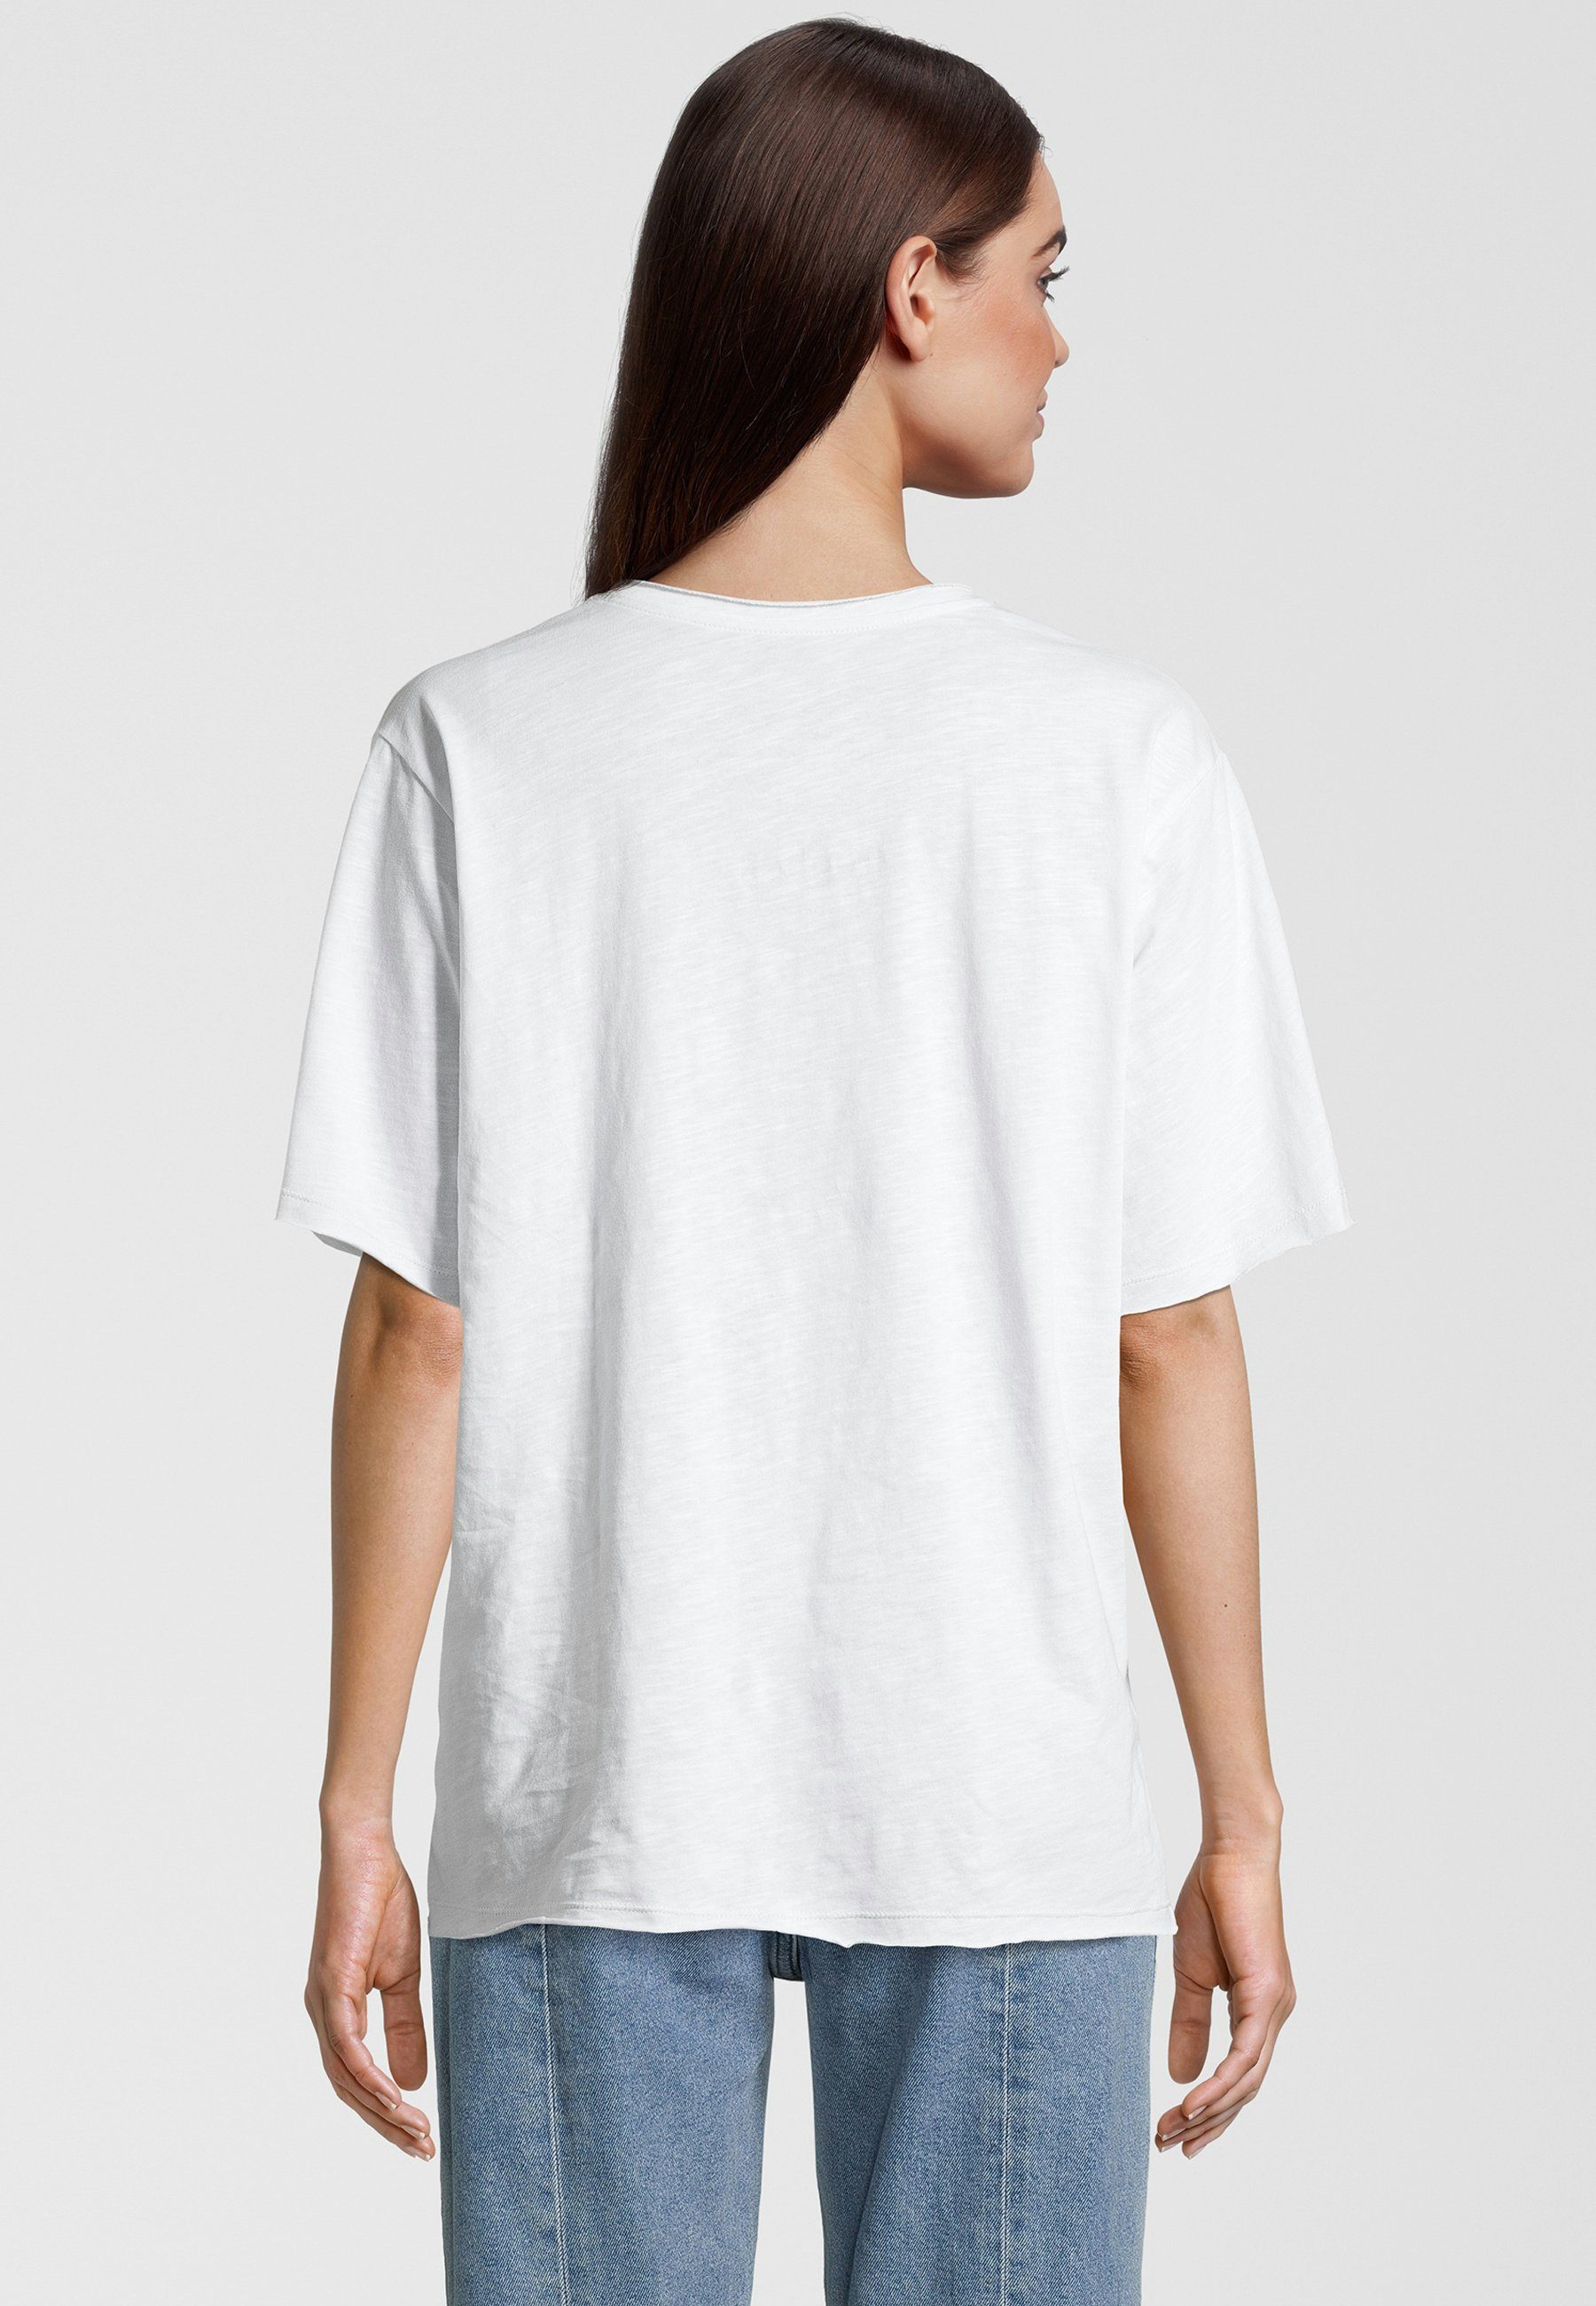 Frogbox T-Shirt mit Garfield-Print T-Shirt modernem Design mit